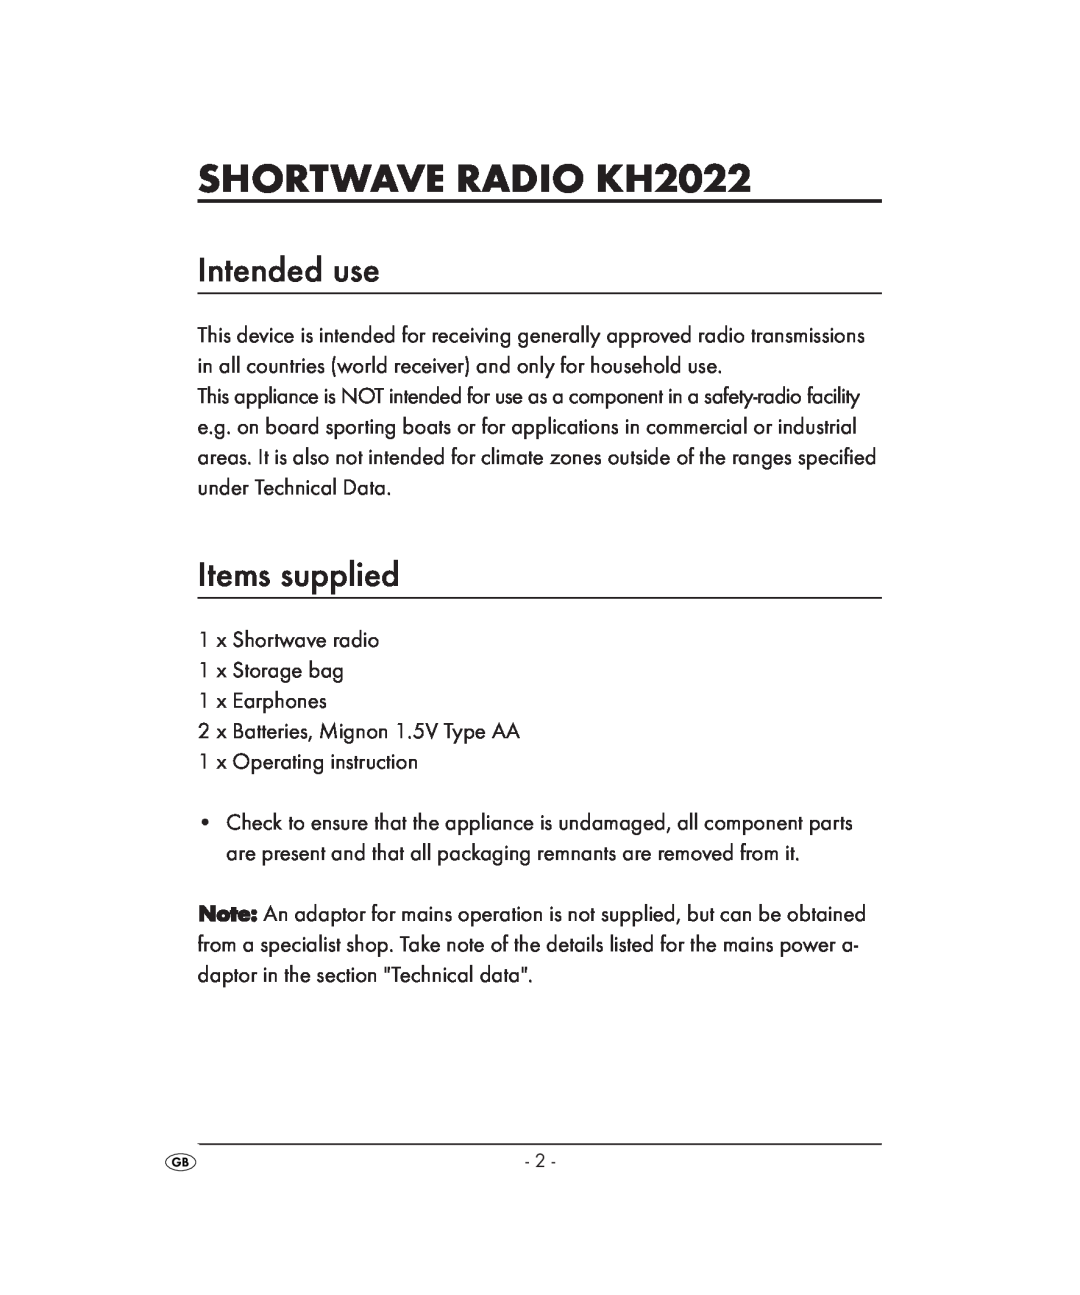 Kompernass KH 2022 manual SHORTWAVE RADIO KH2022, Intended use, Items supplied 